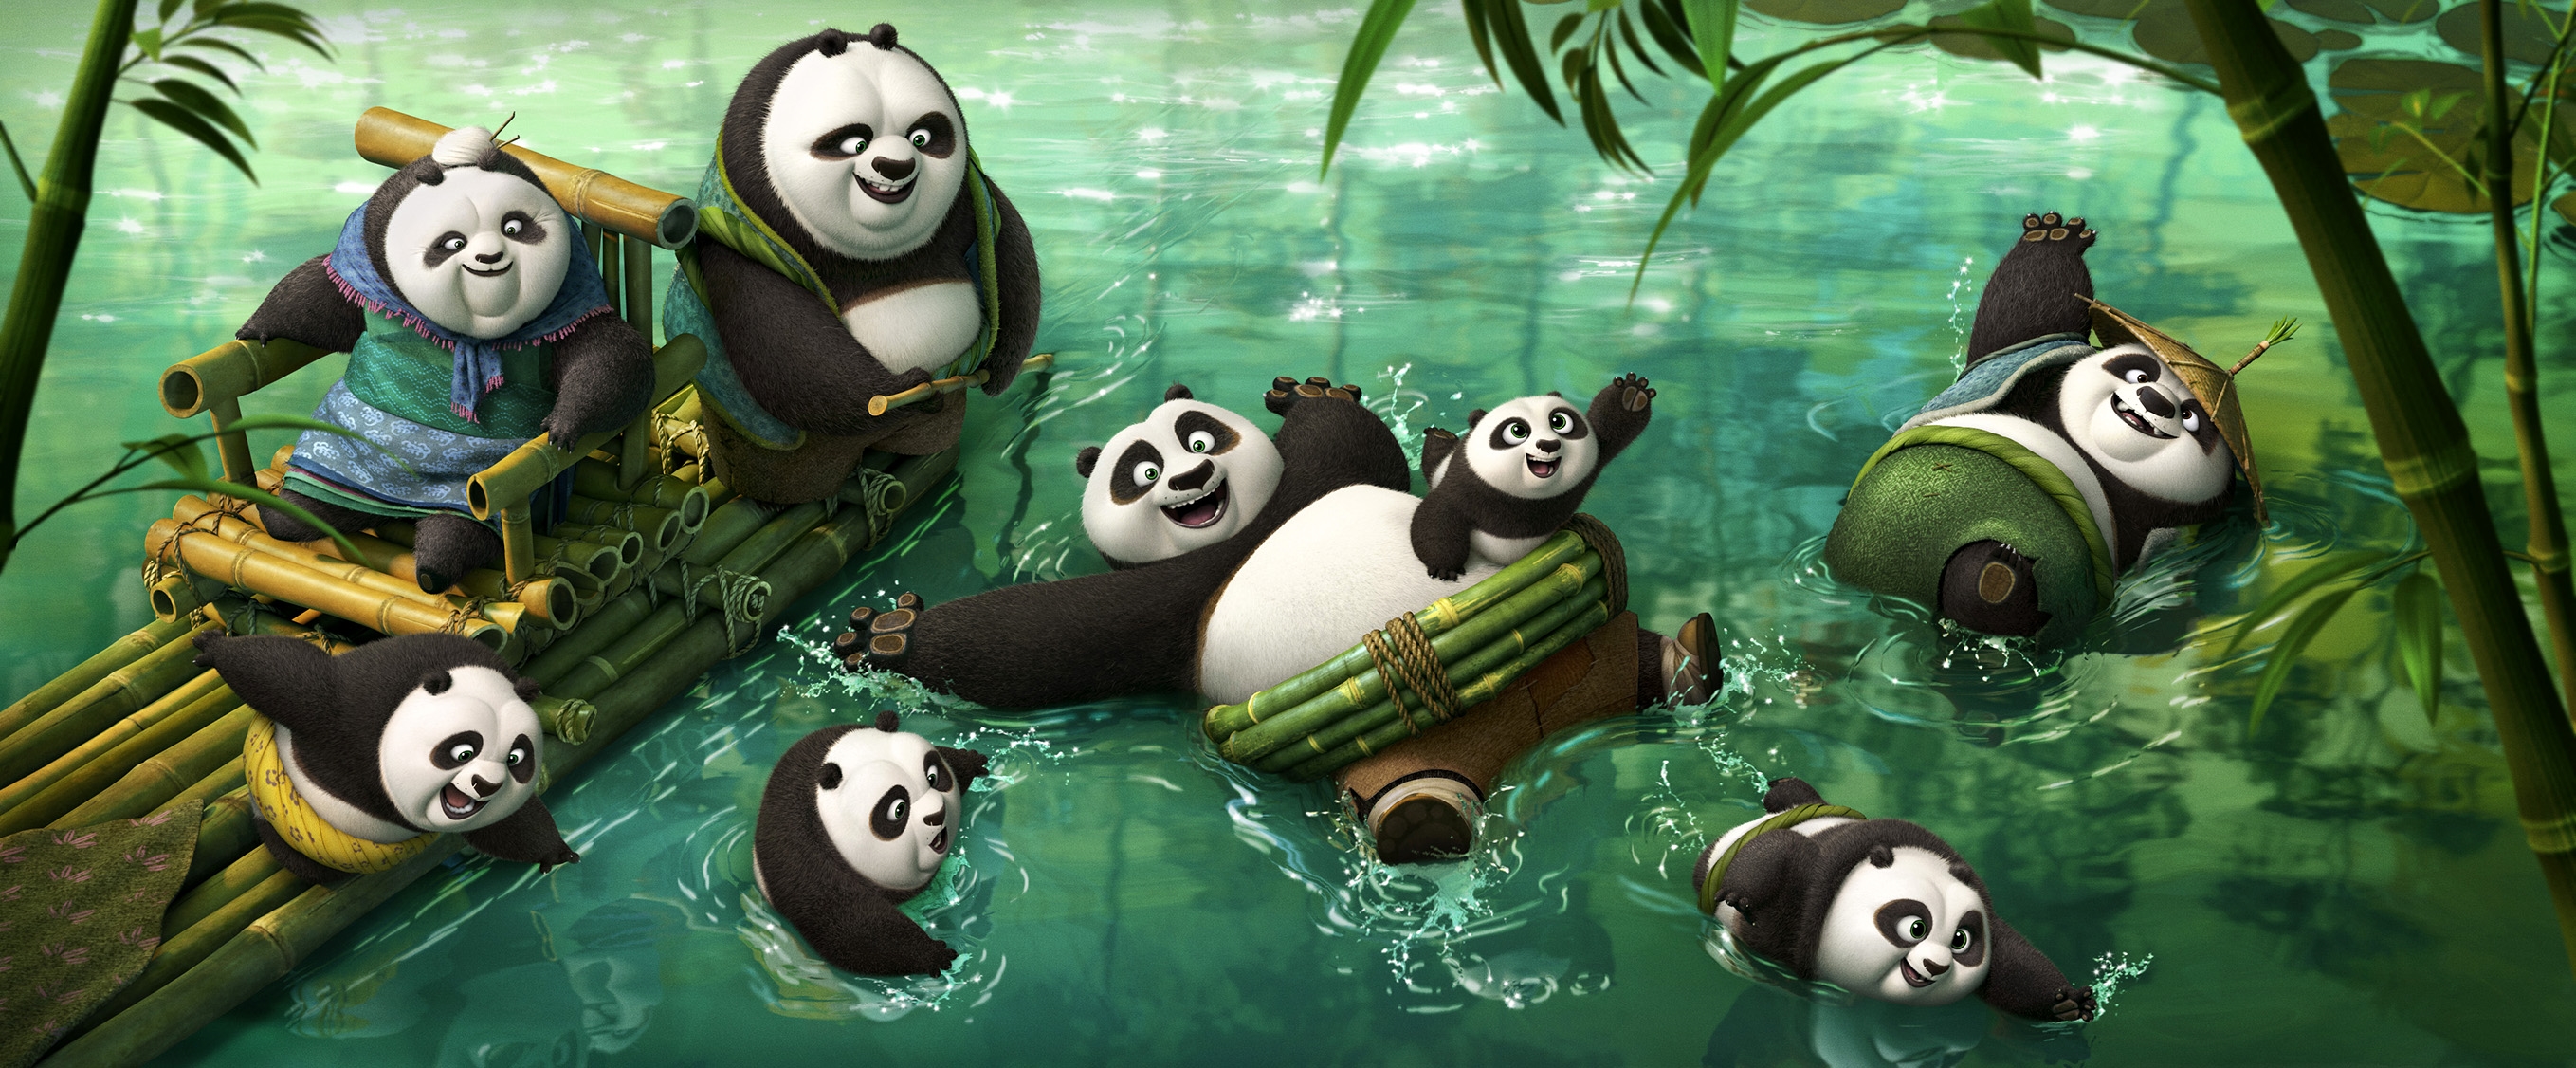 Image du film Kung Fu Panda 3 10d9a900-32cf-4f95-b001-728caadc99bf